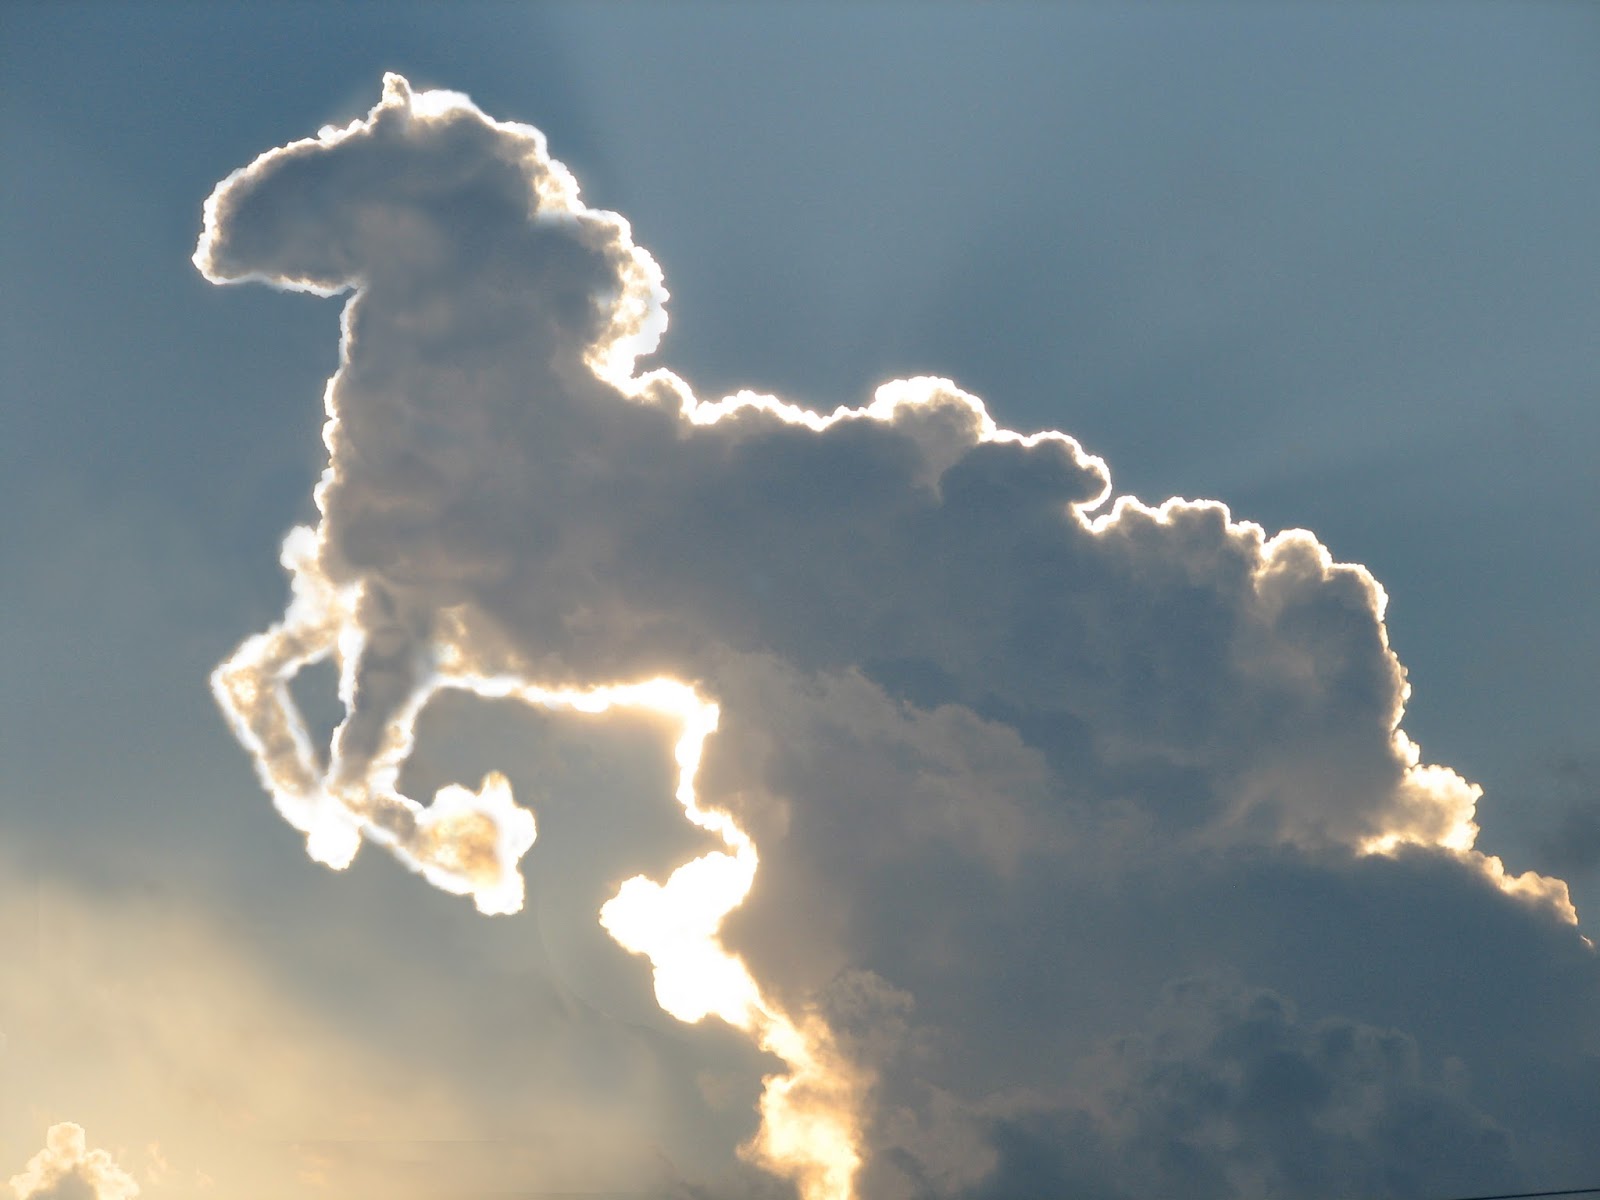 Sky_Horse cloud